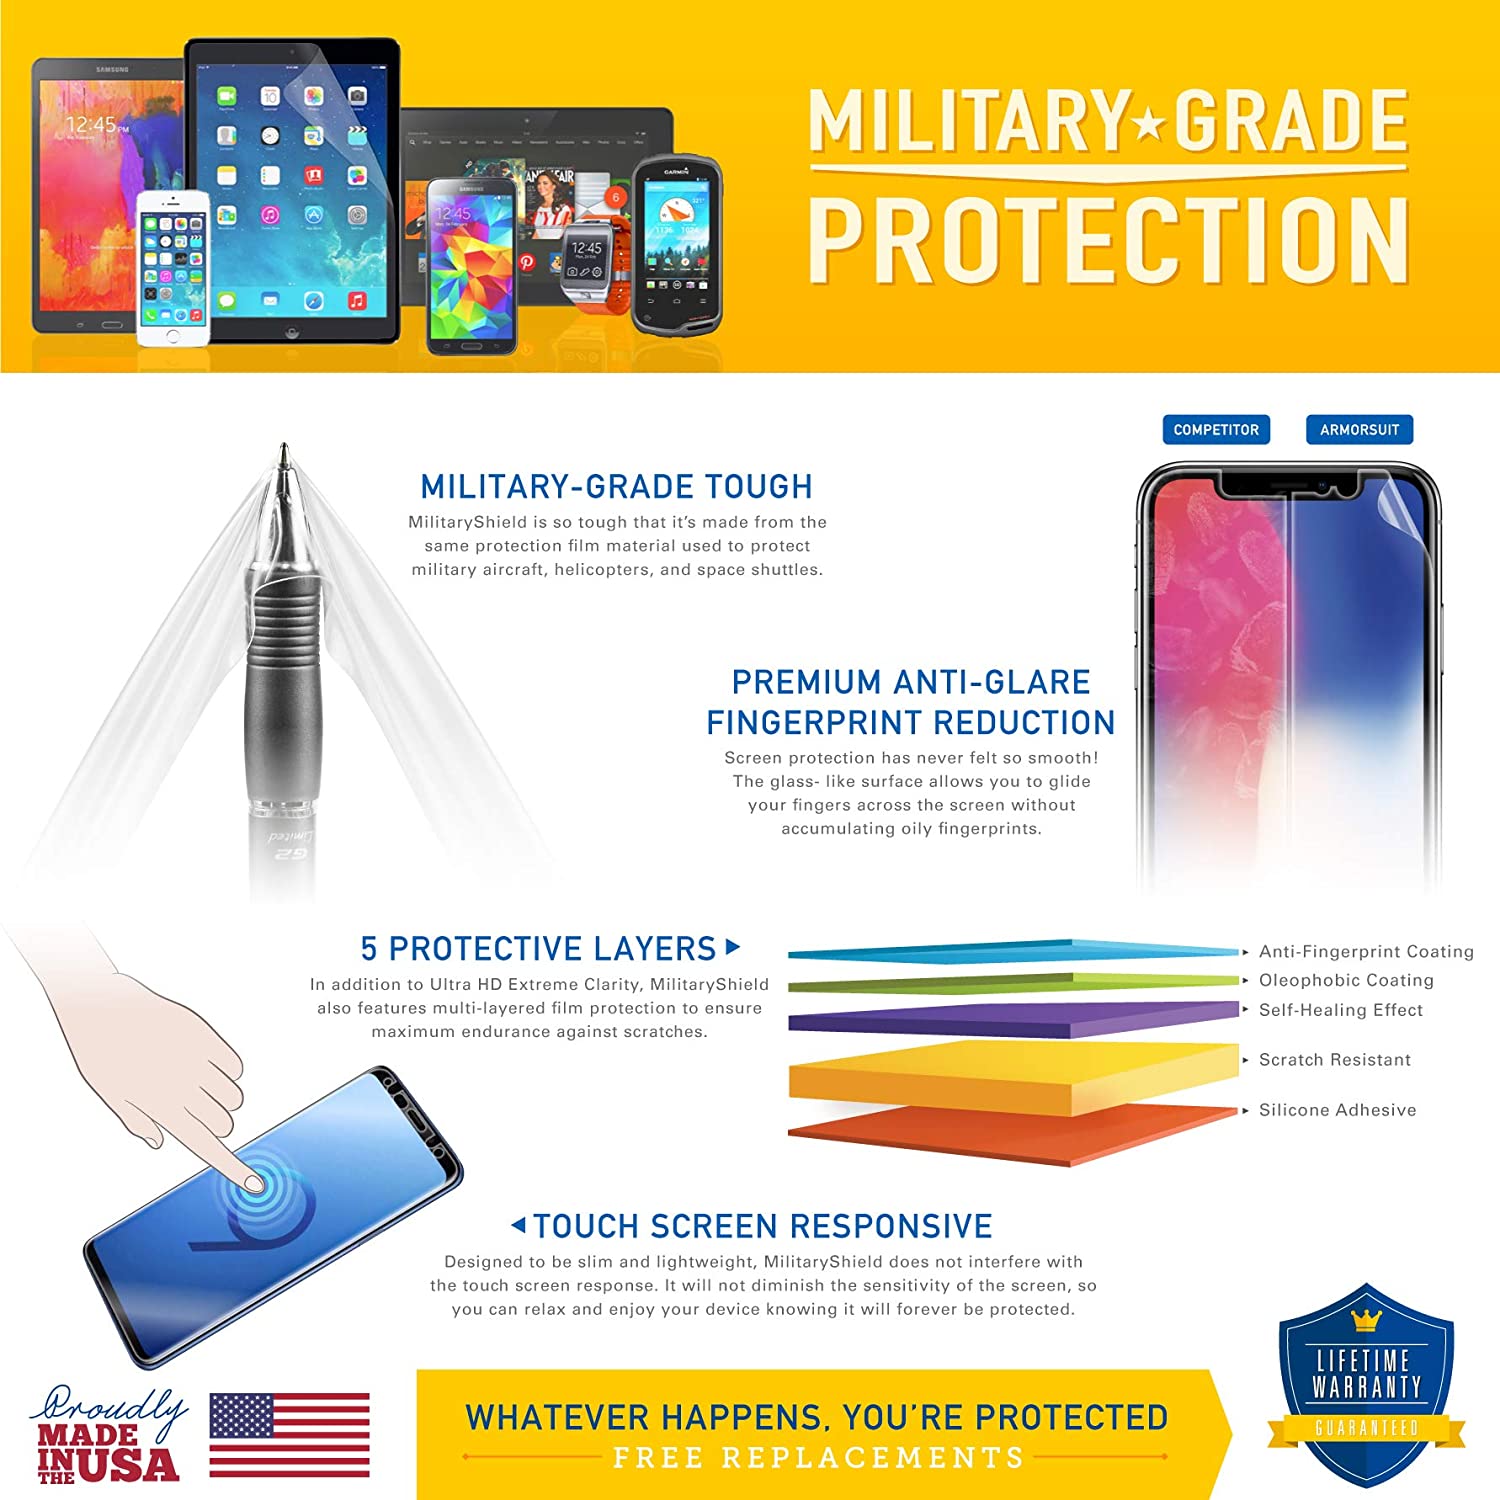 Samsung Galaxy Tab 7.0 Plus Screen Protector + Black Carbon Fiber Skin Protector